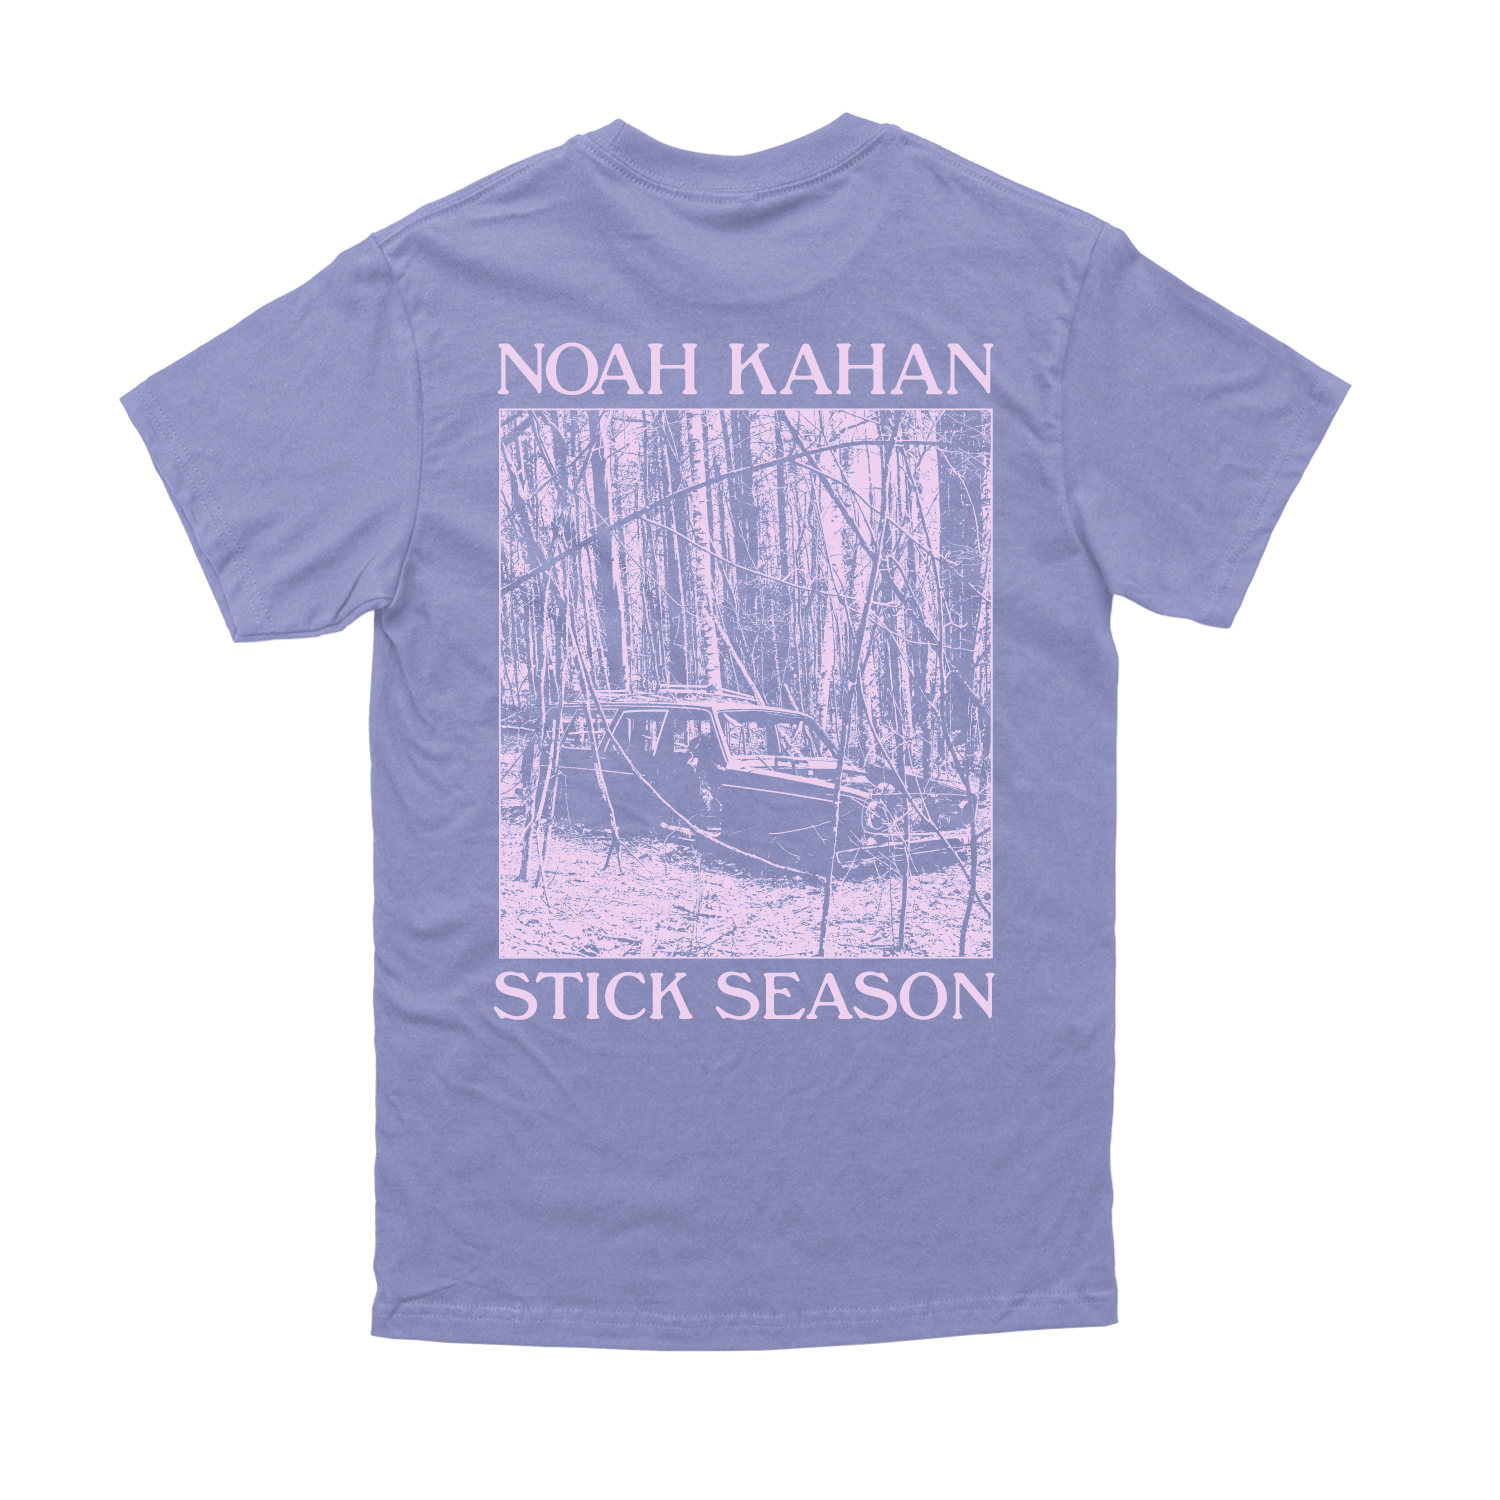 Noah Kahan Comfort Colors Violet Stick Season tee with full stick season album art on back